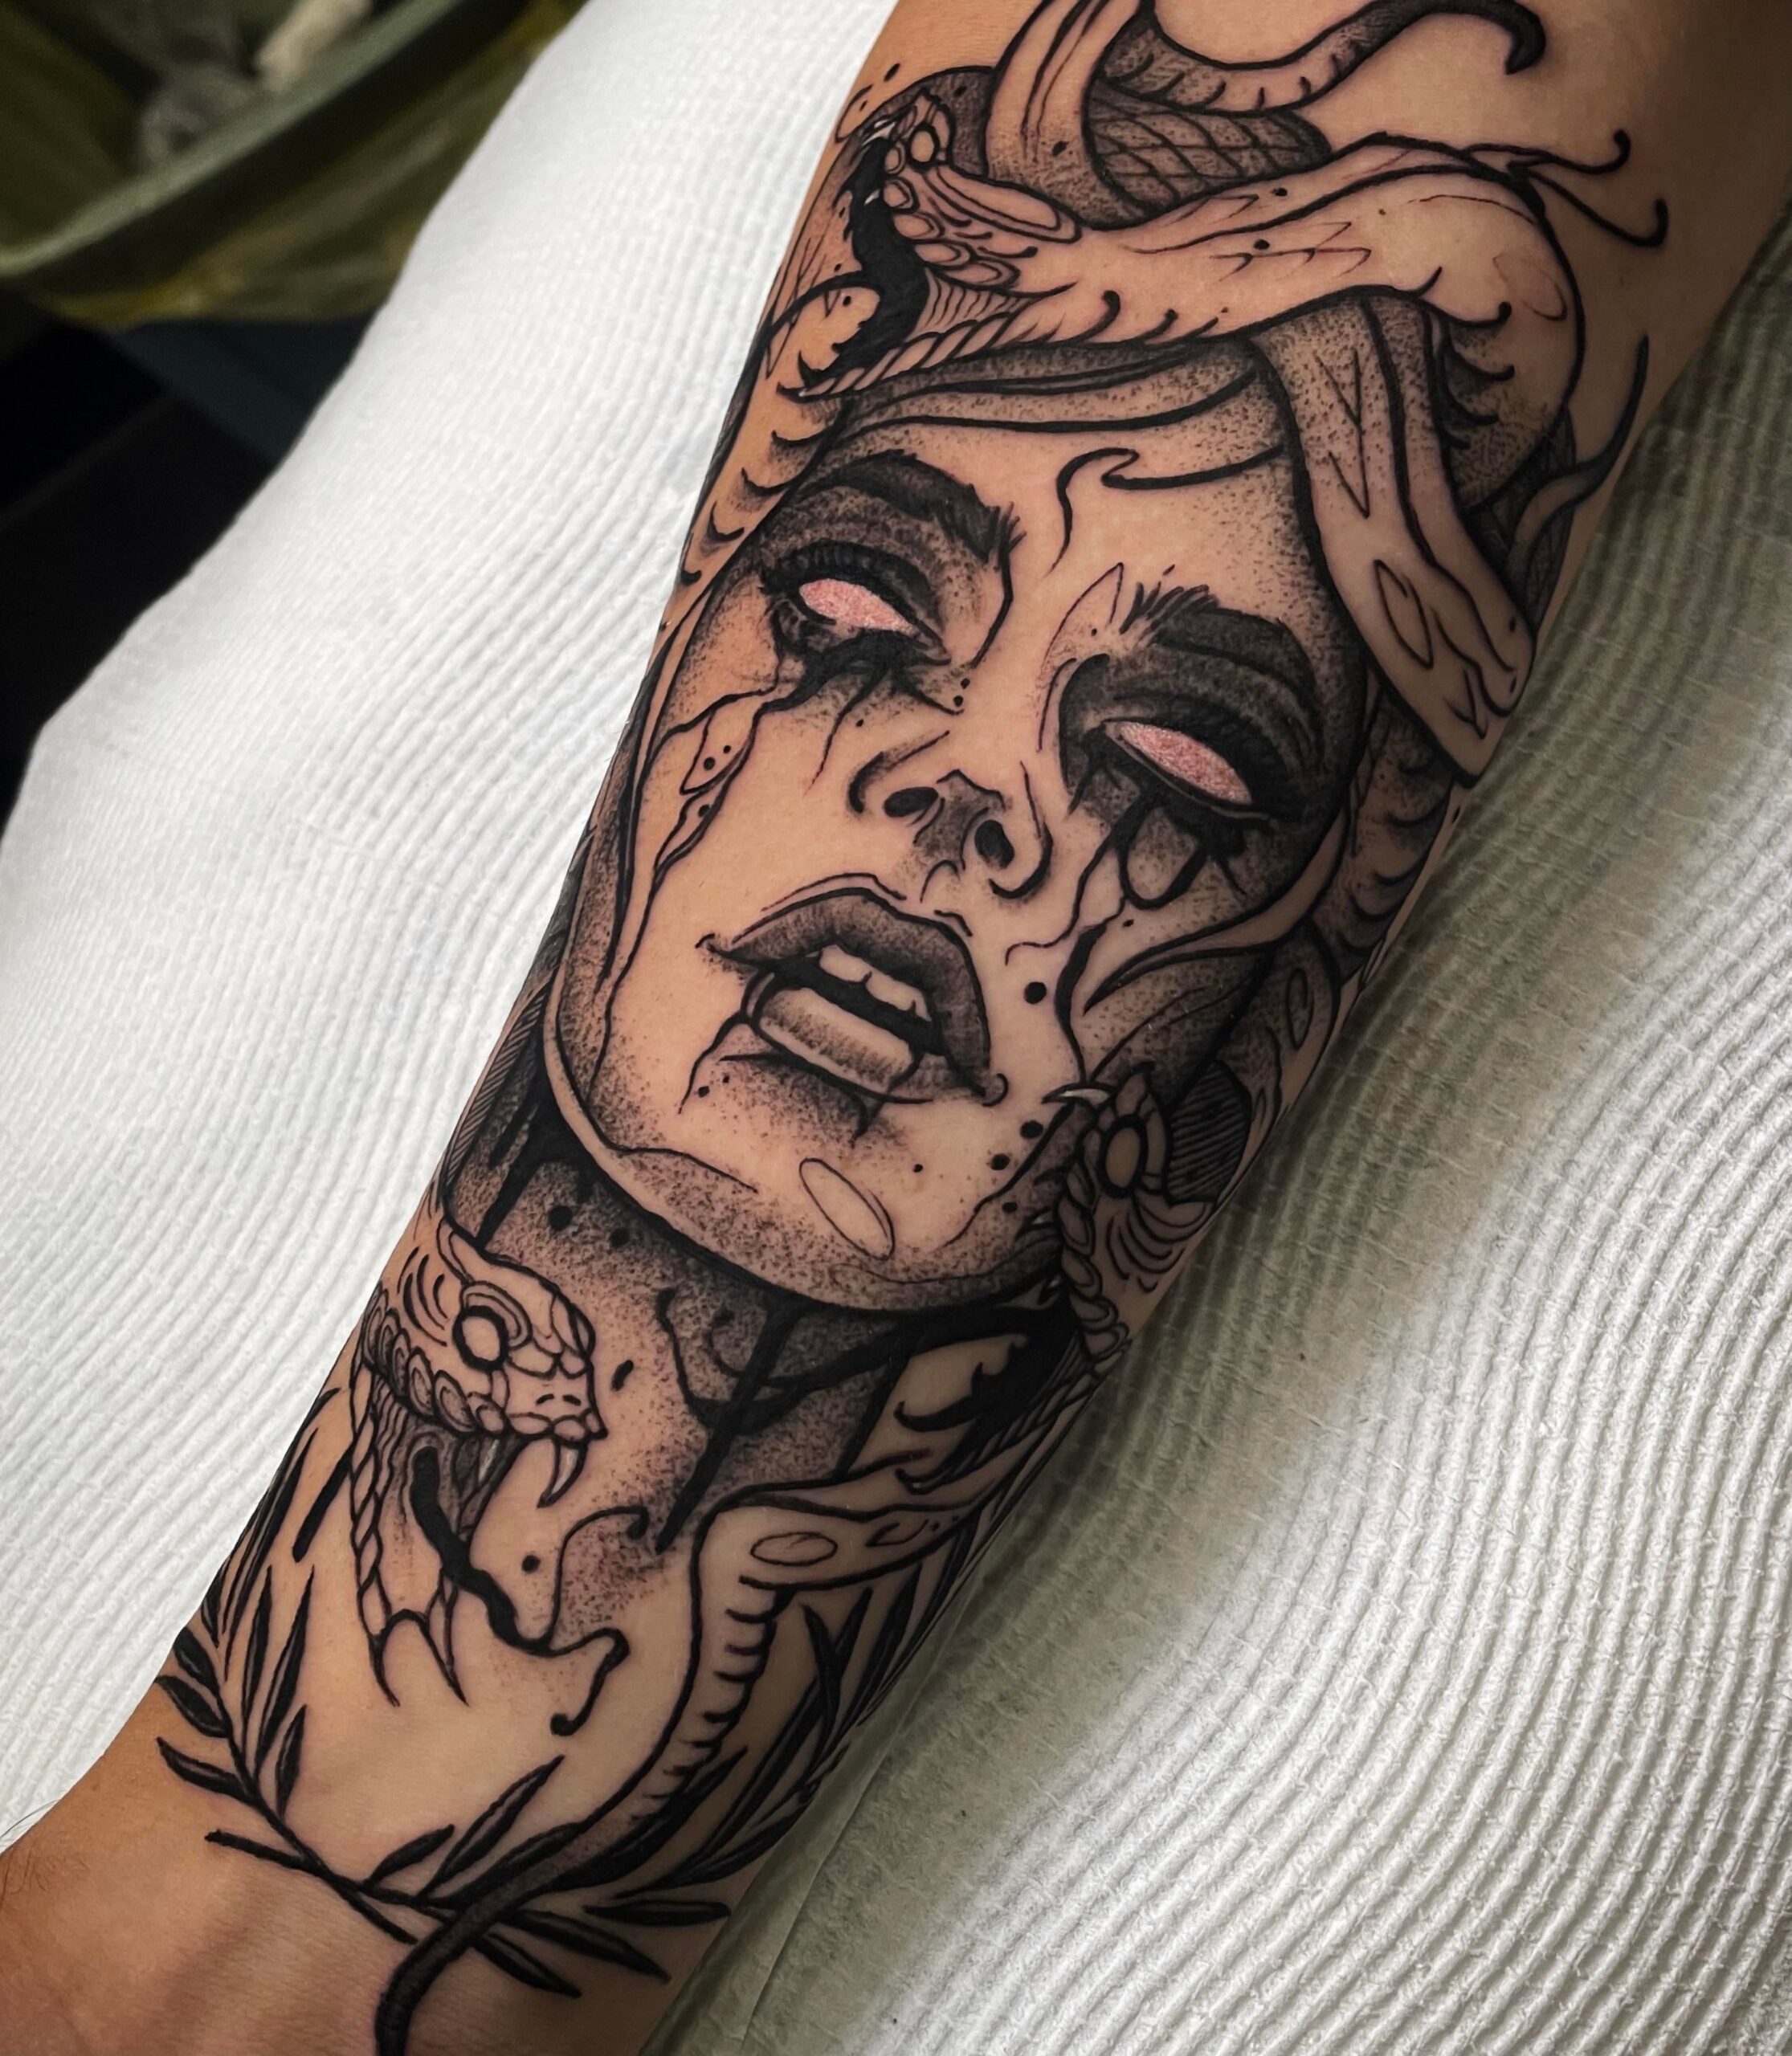 Forearm Medusa Tattoo